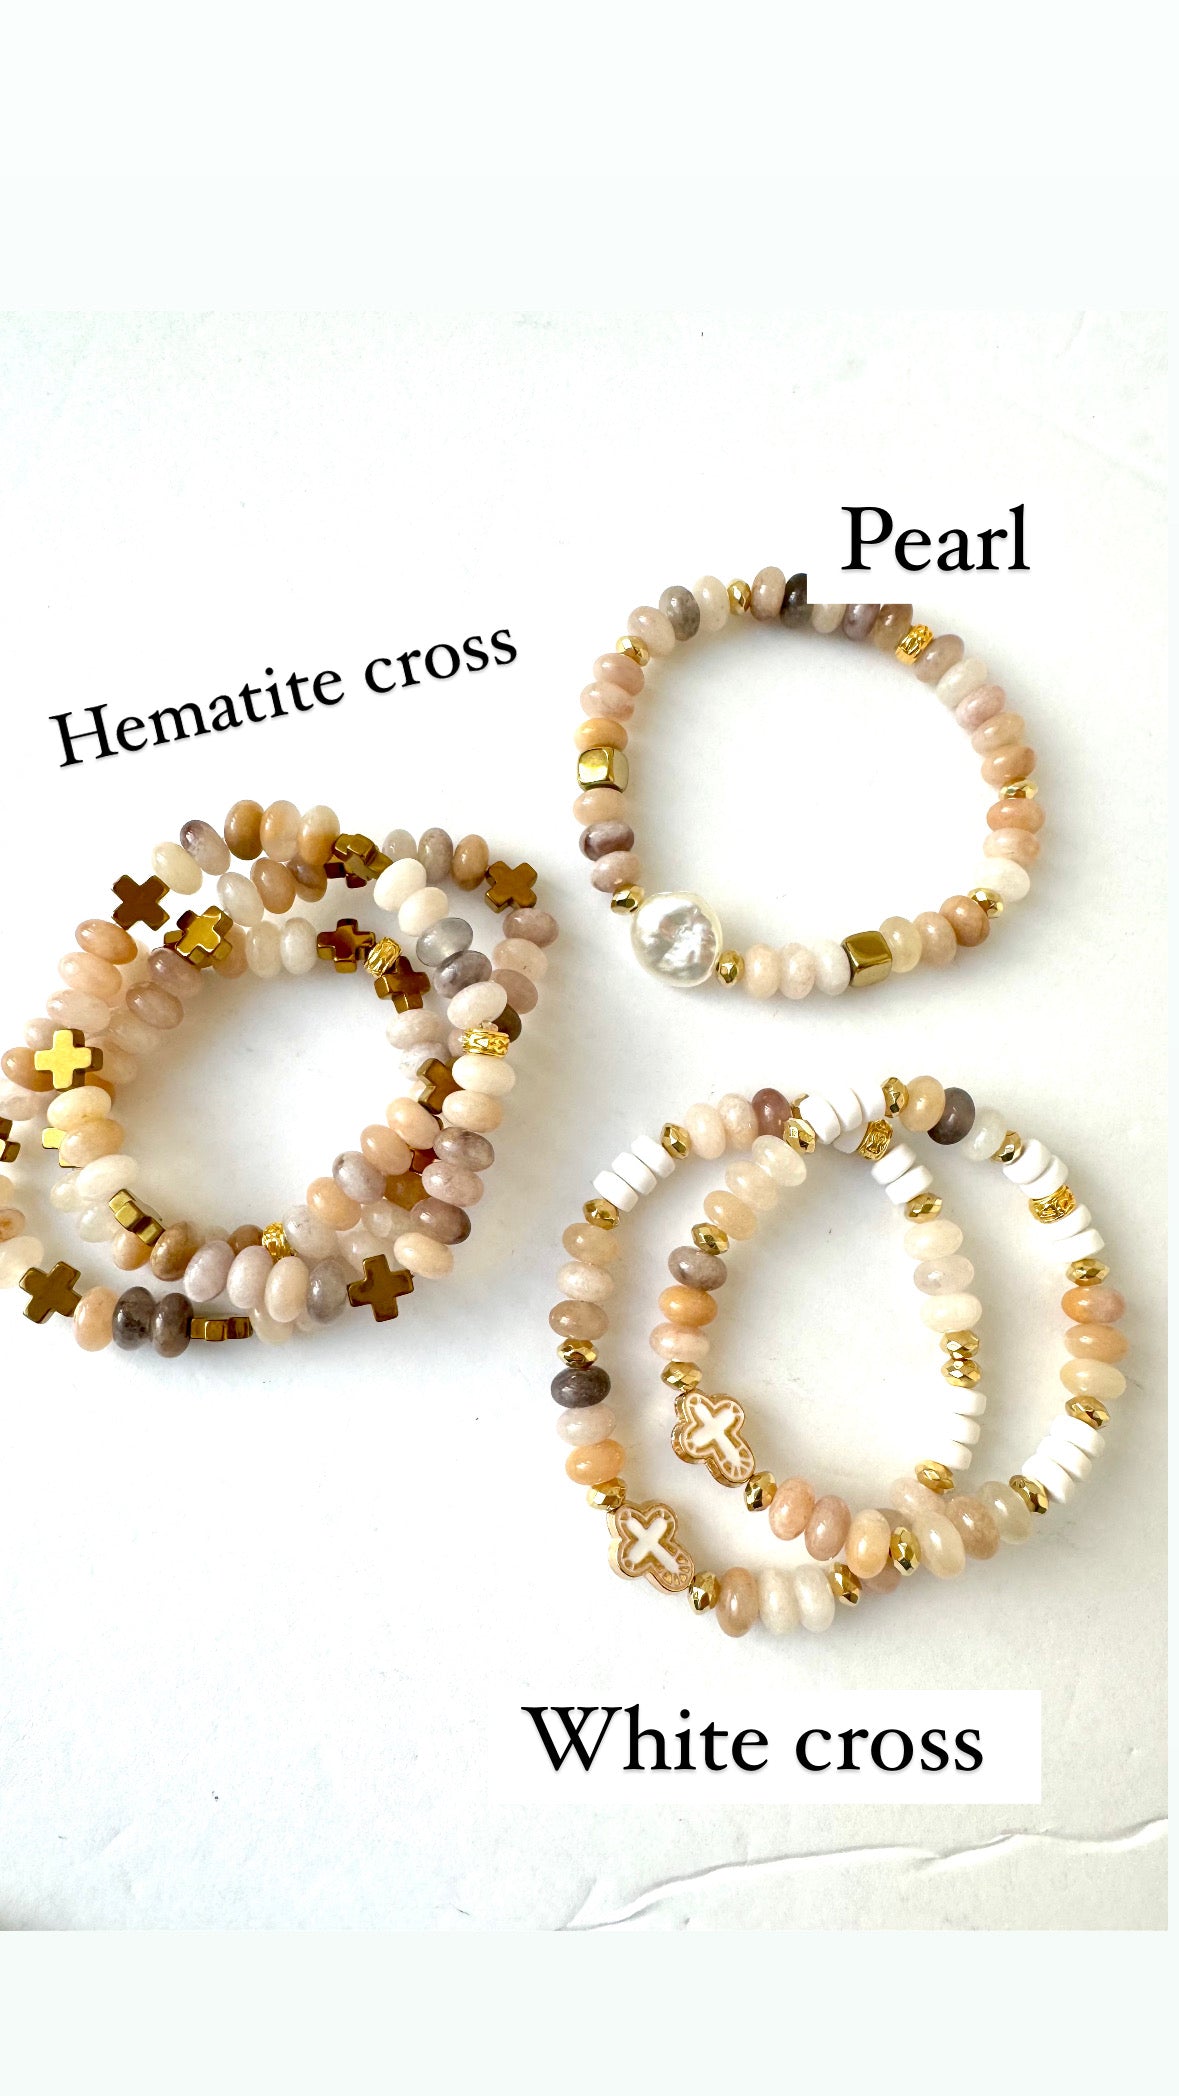 The Pearlie Bracelet